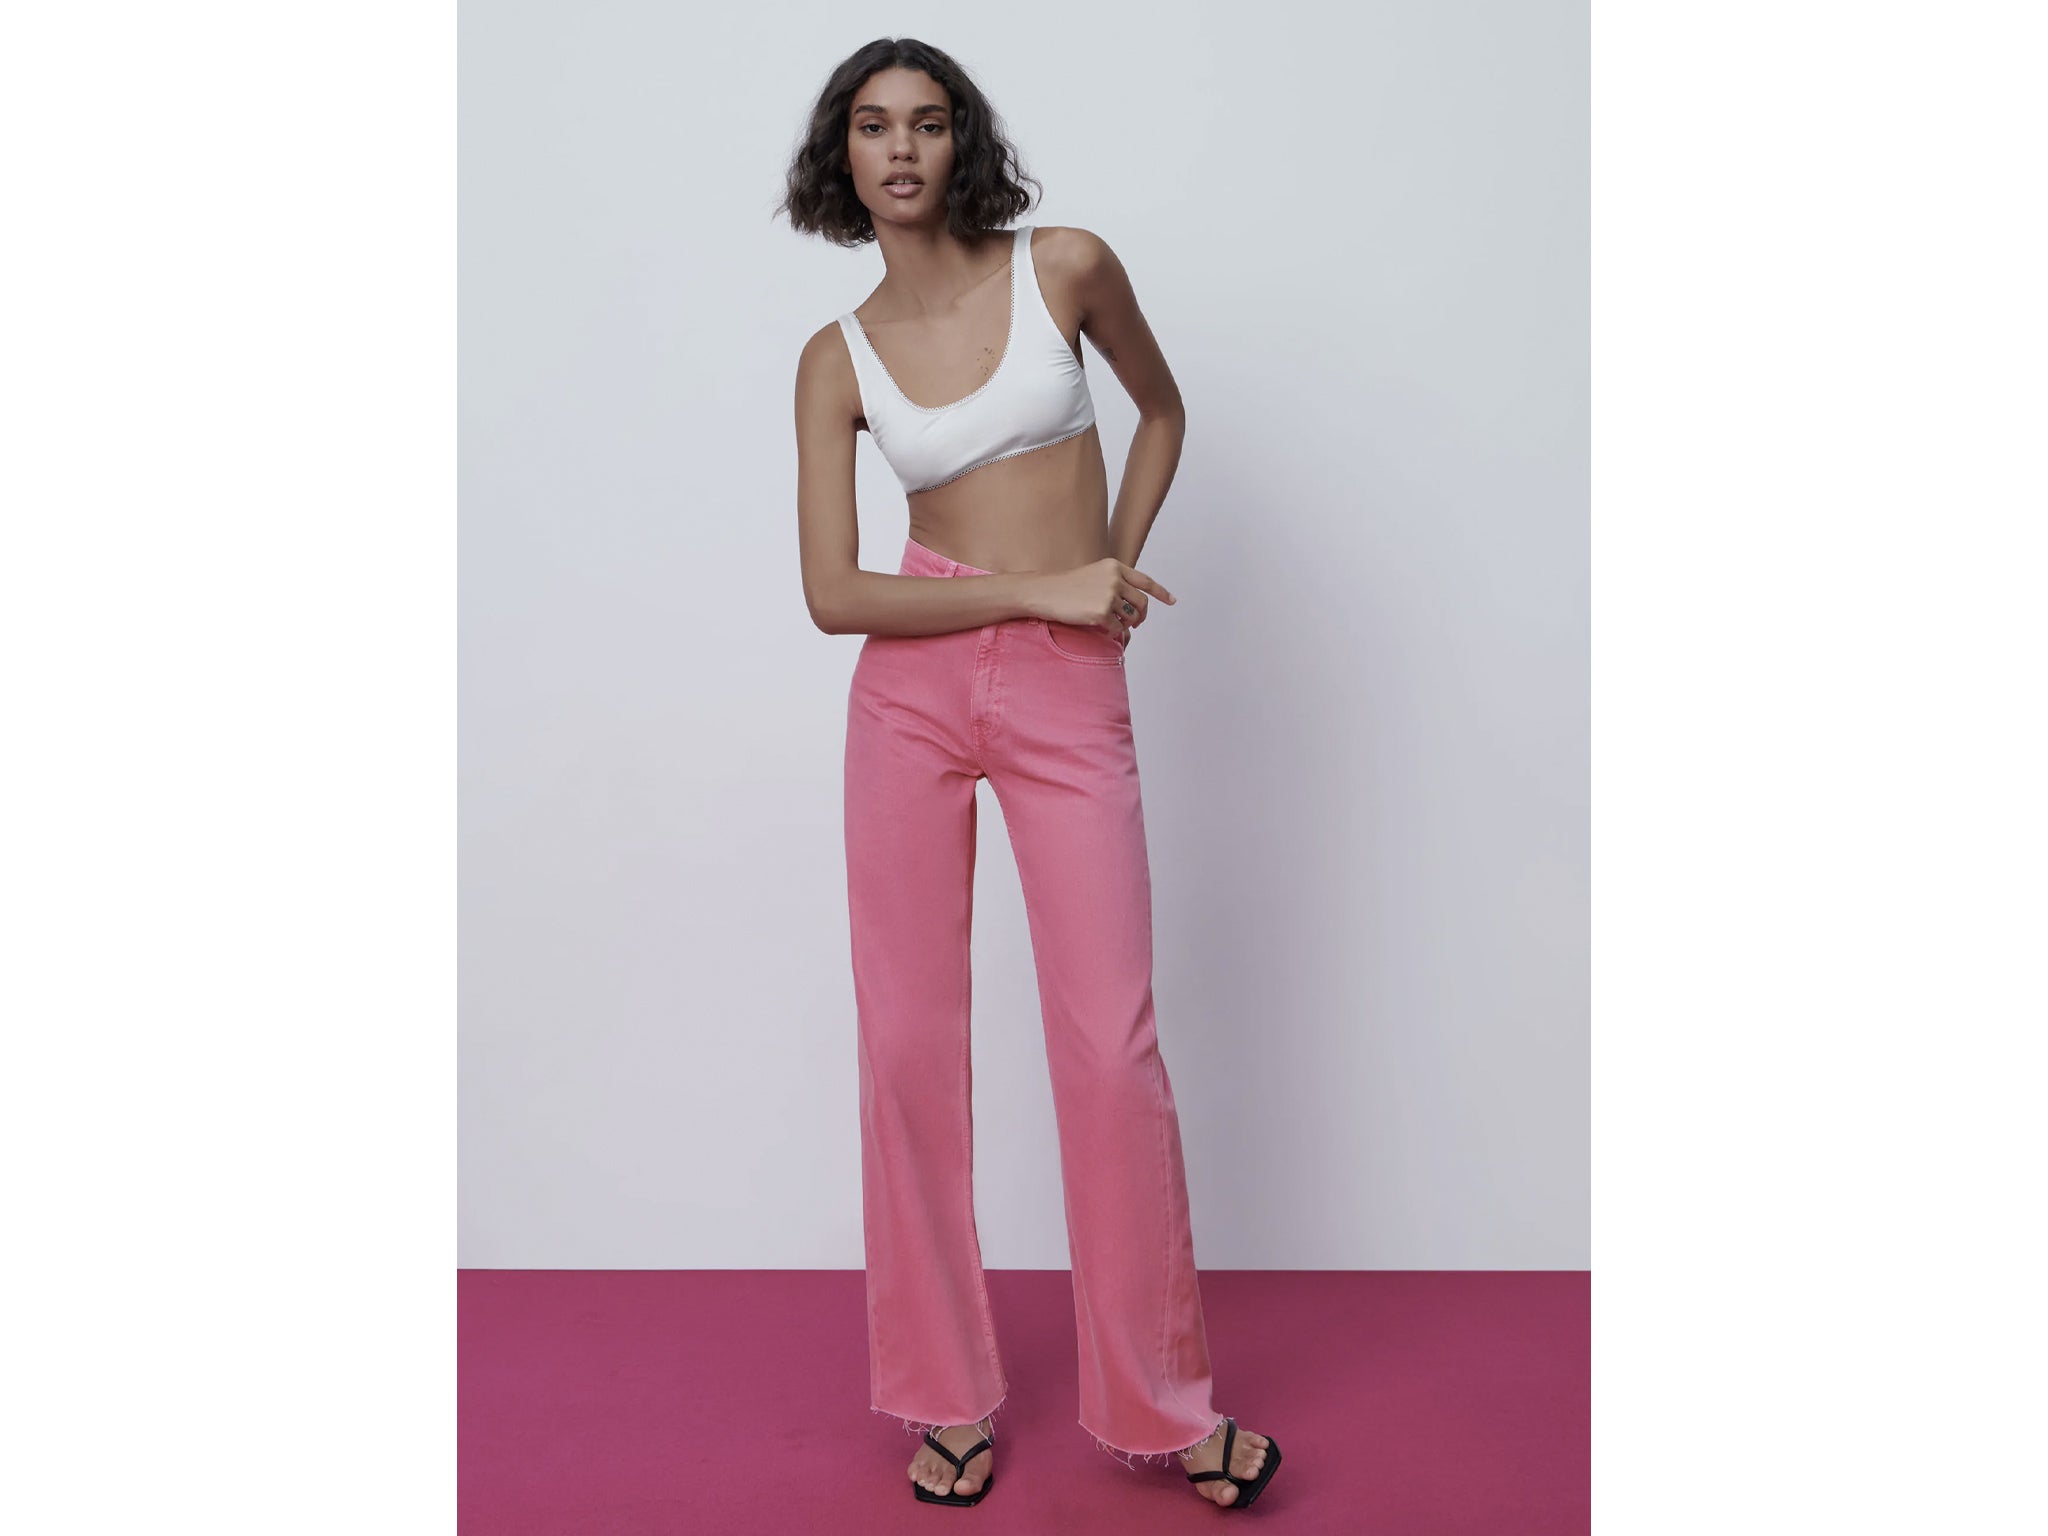 audition Svømmepøl mekanisme Zara's pink wide leg jeans are going viral on TikTok | The Independent